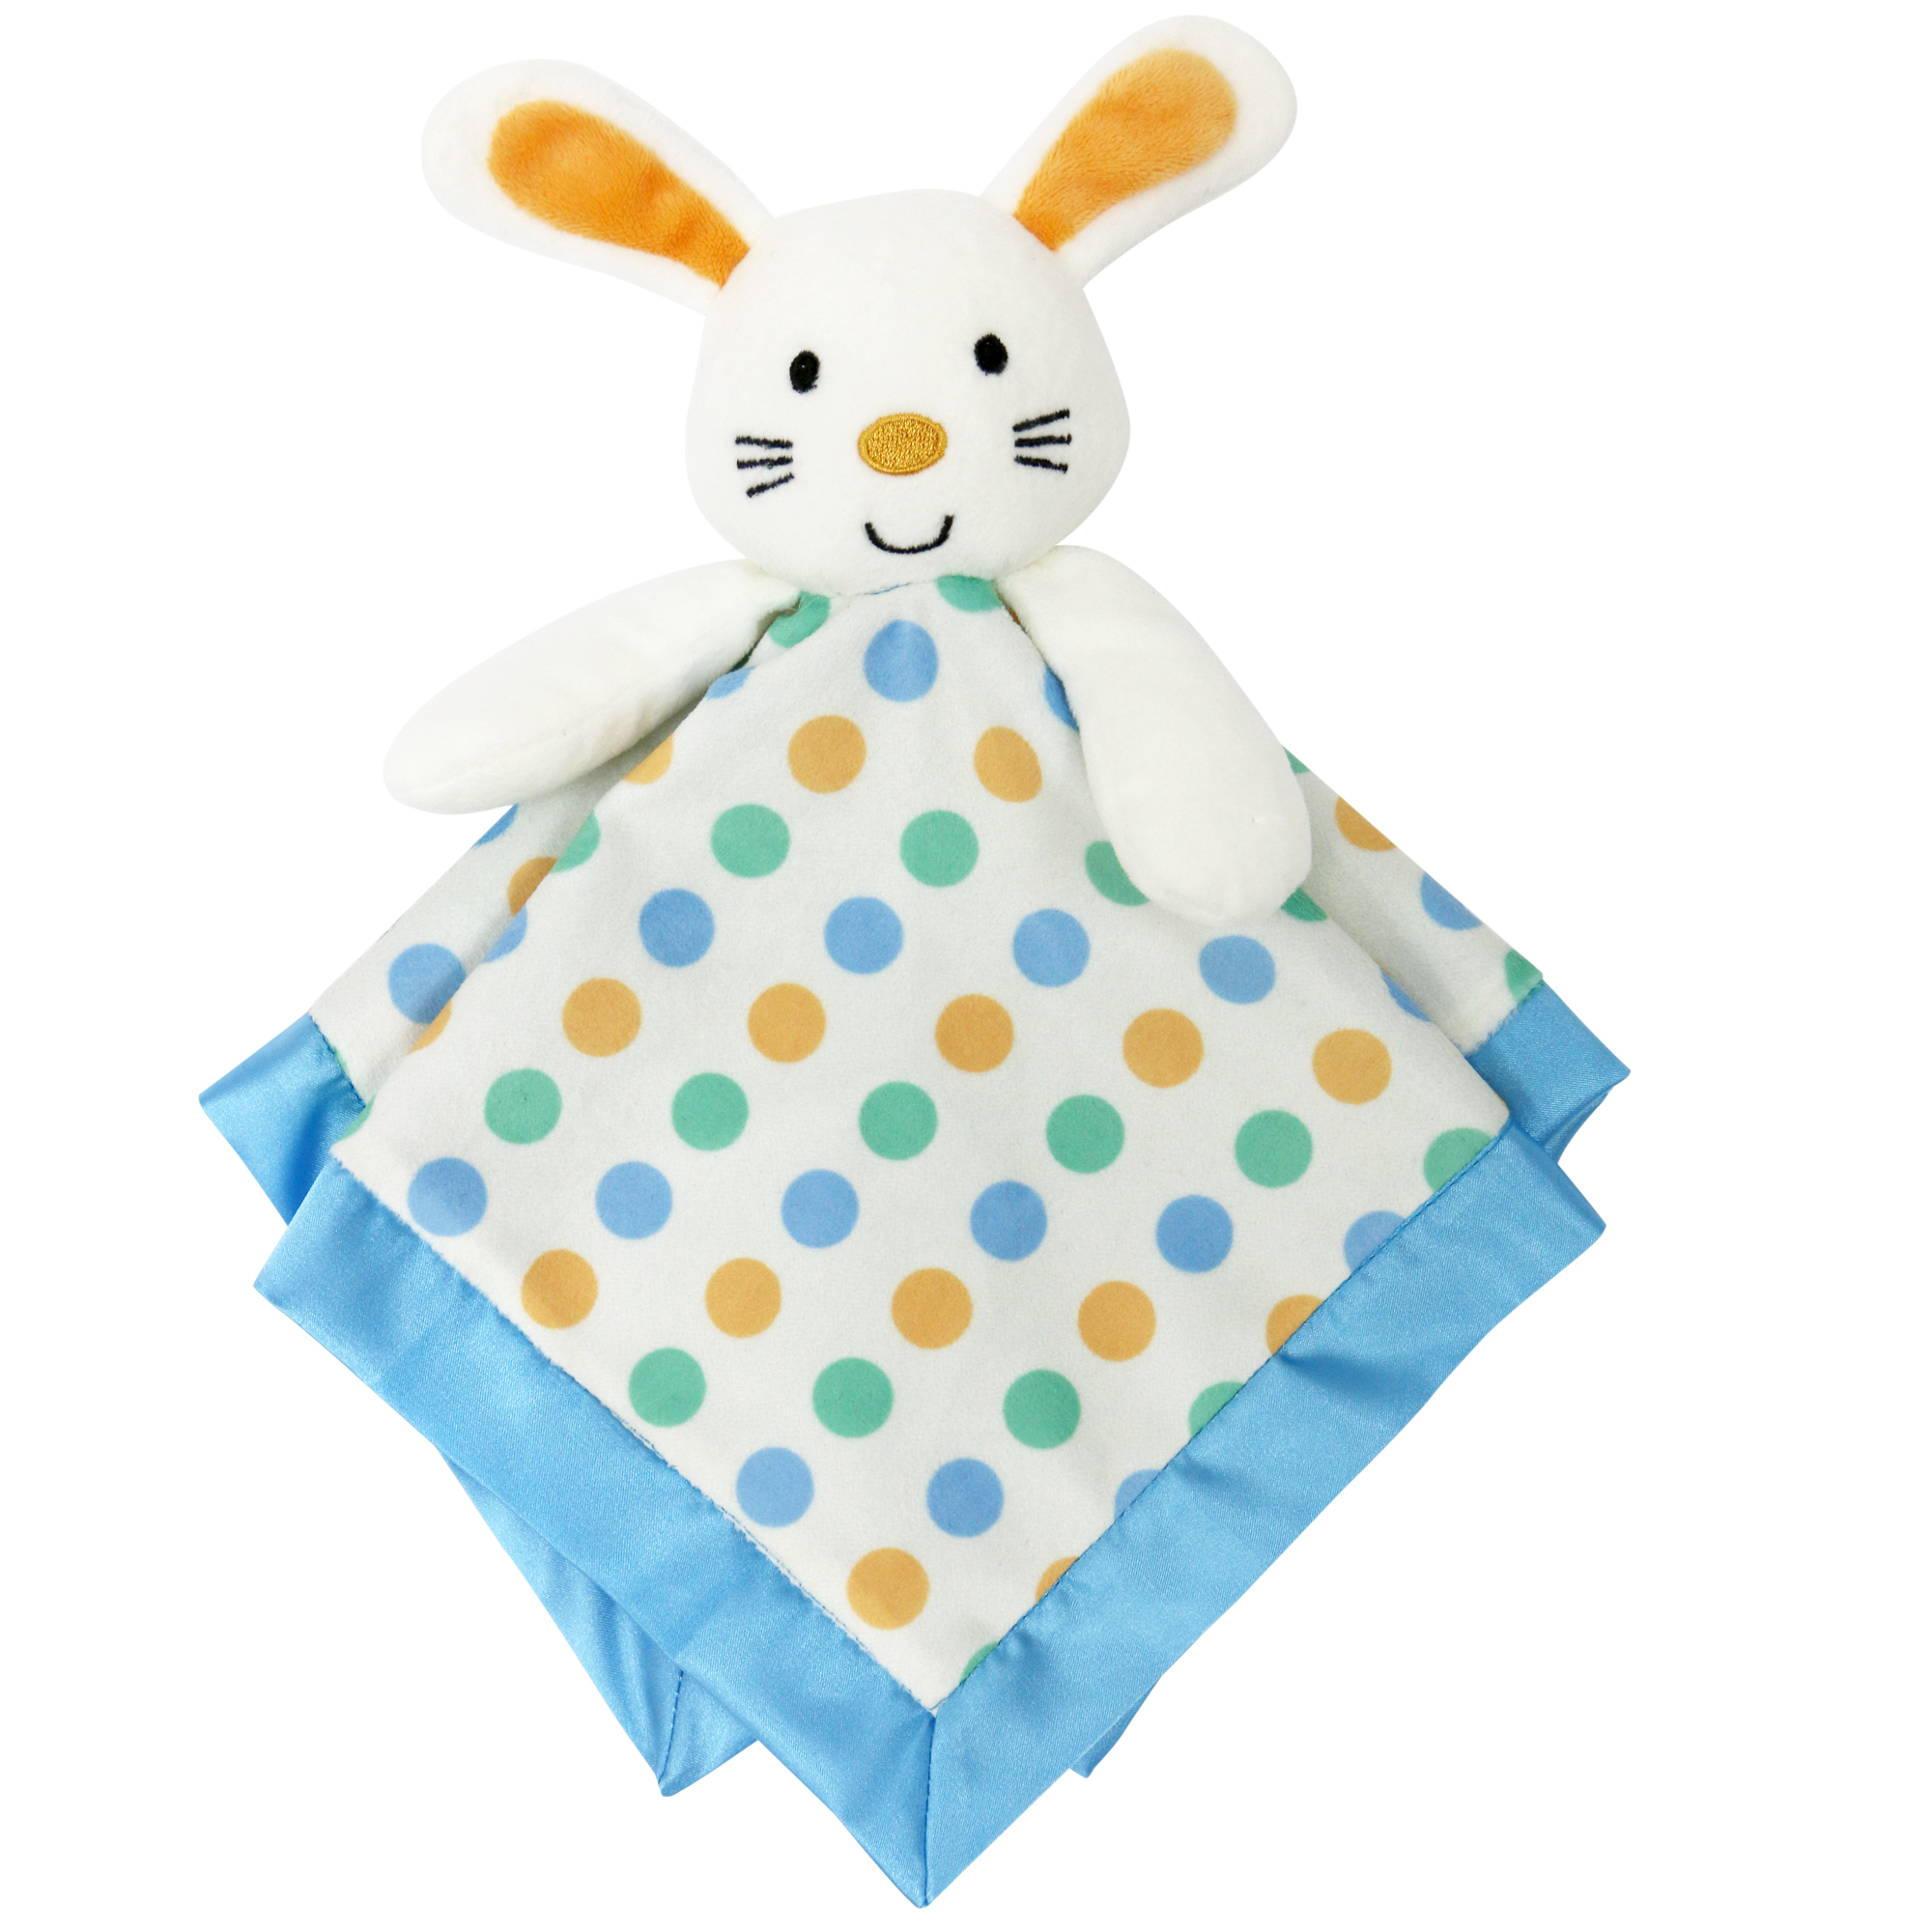 Little Haven Boy Bunny Security Blanket.jpg